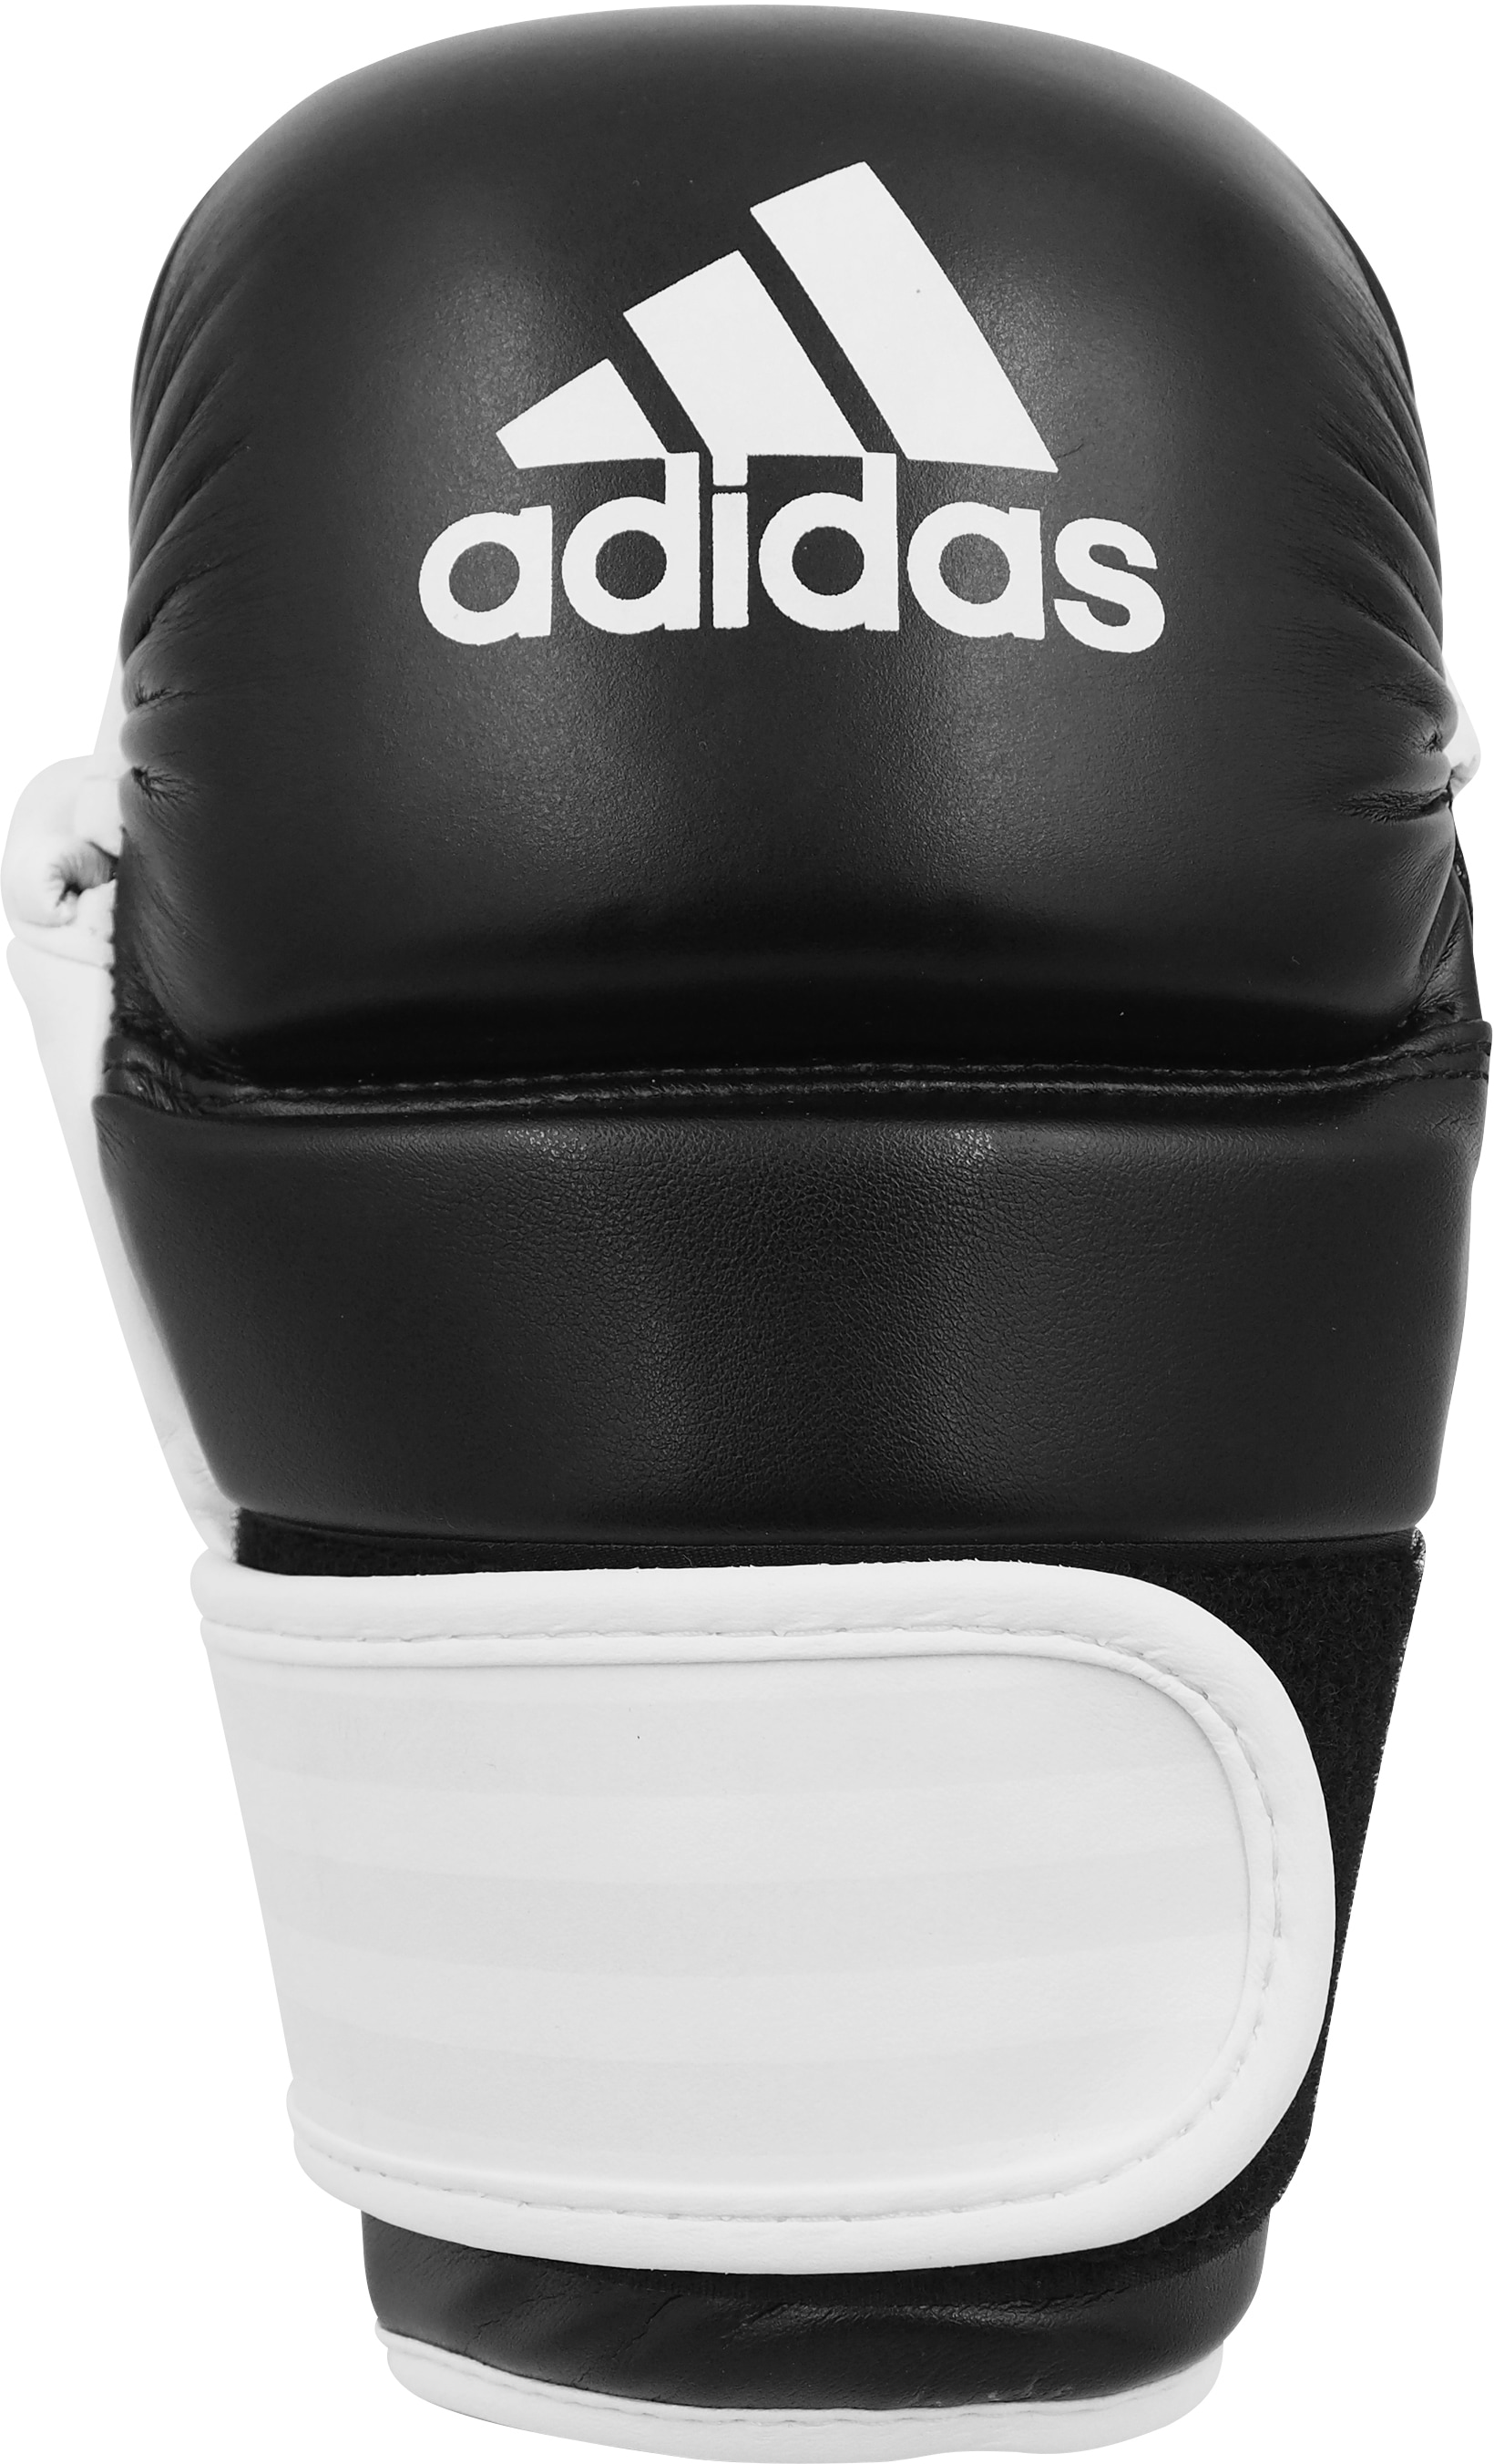 MMA-Handschuhe adidas Performance Entdecke auf Cloves« Grappling »Training